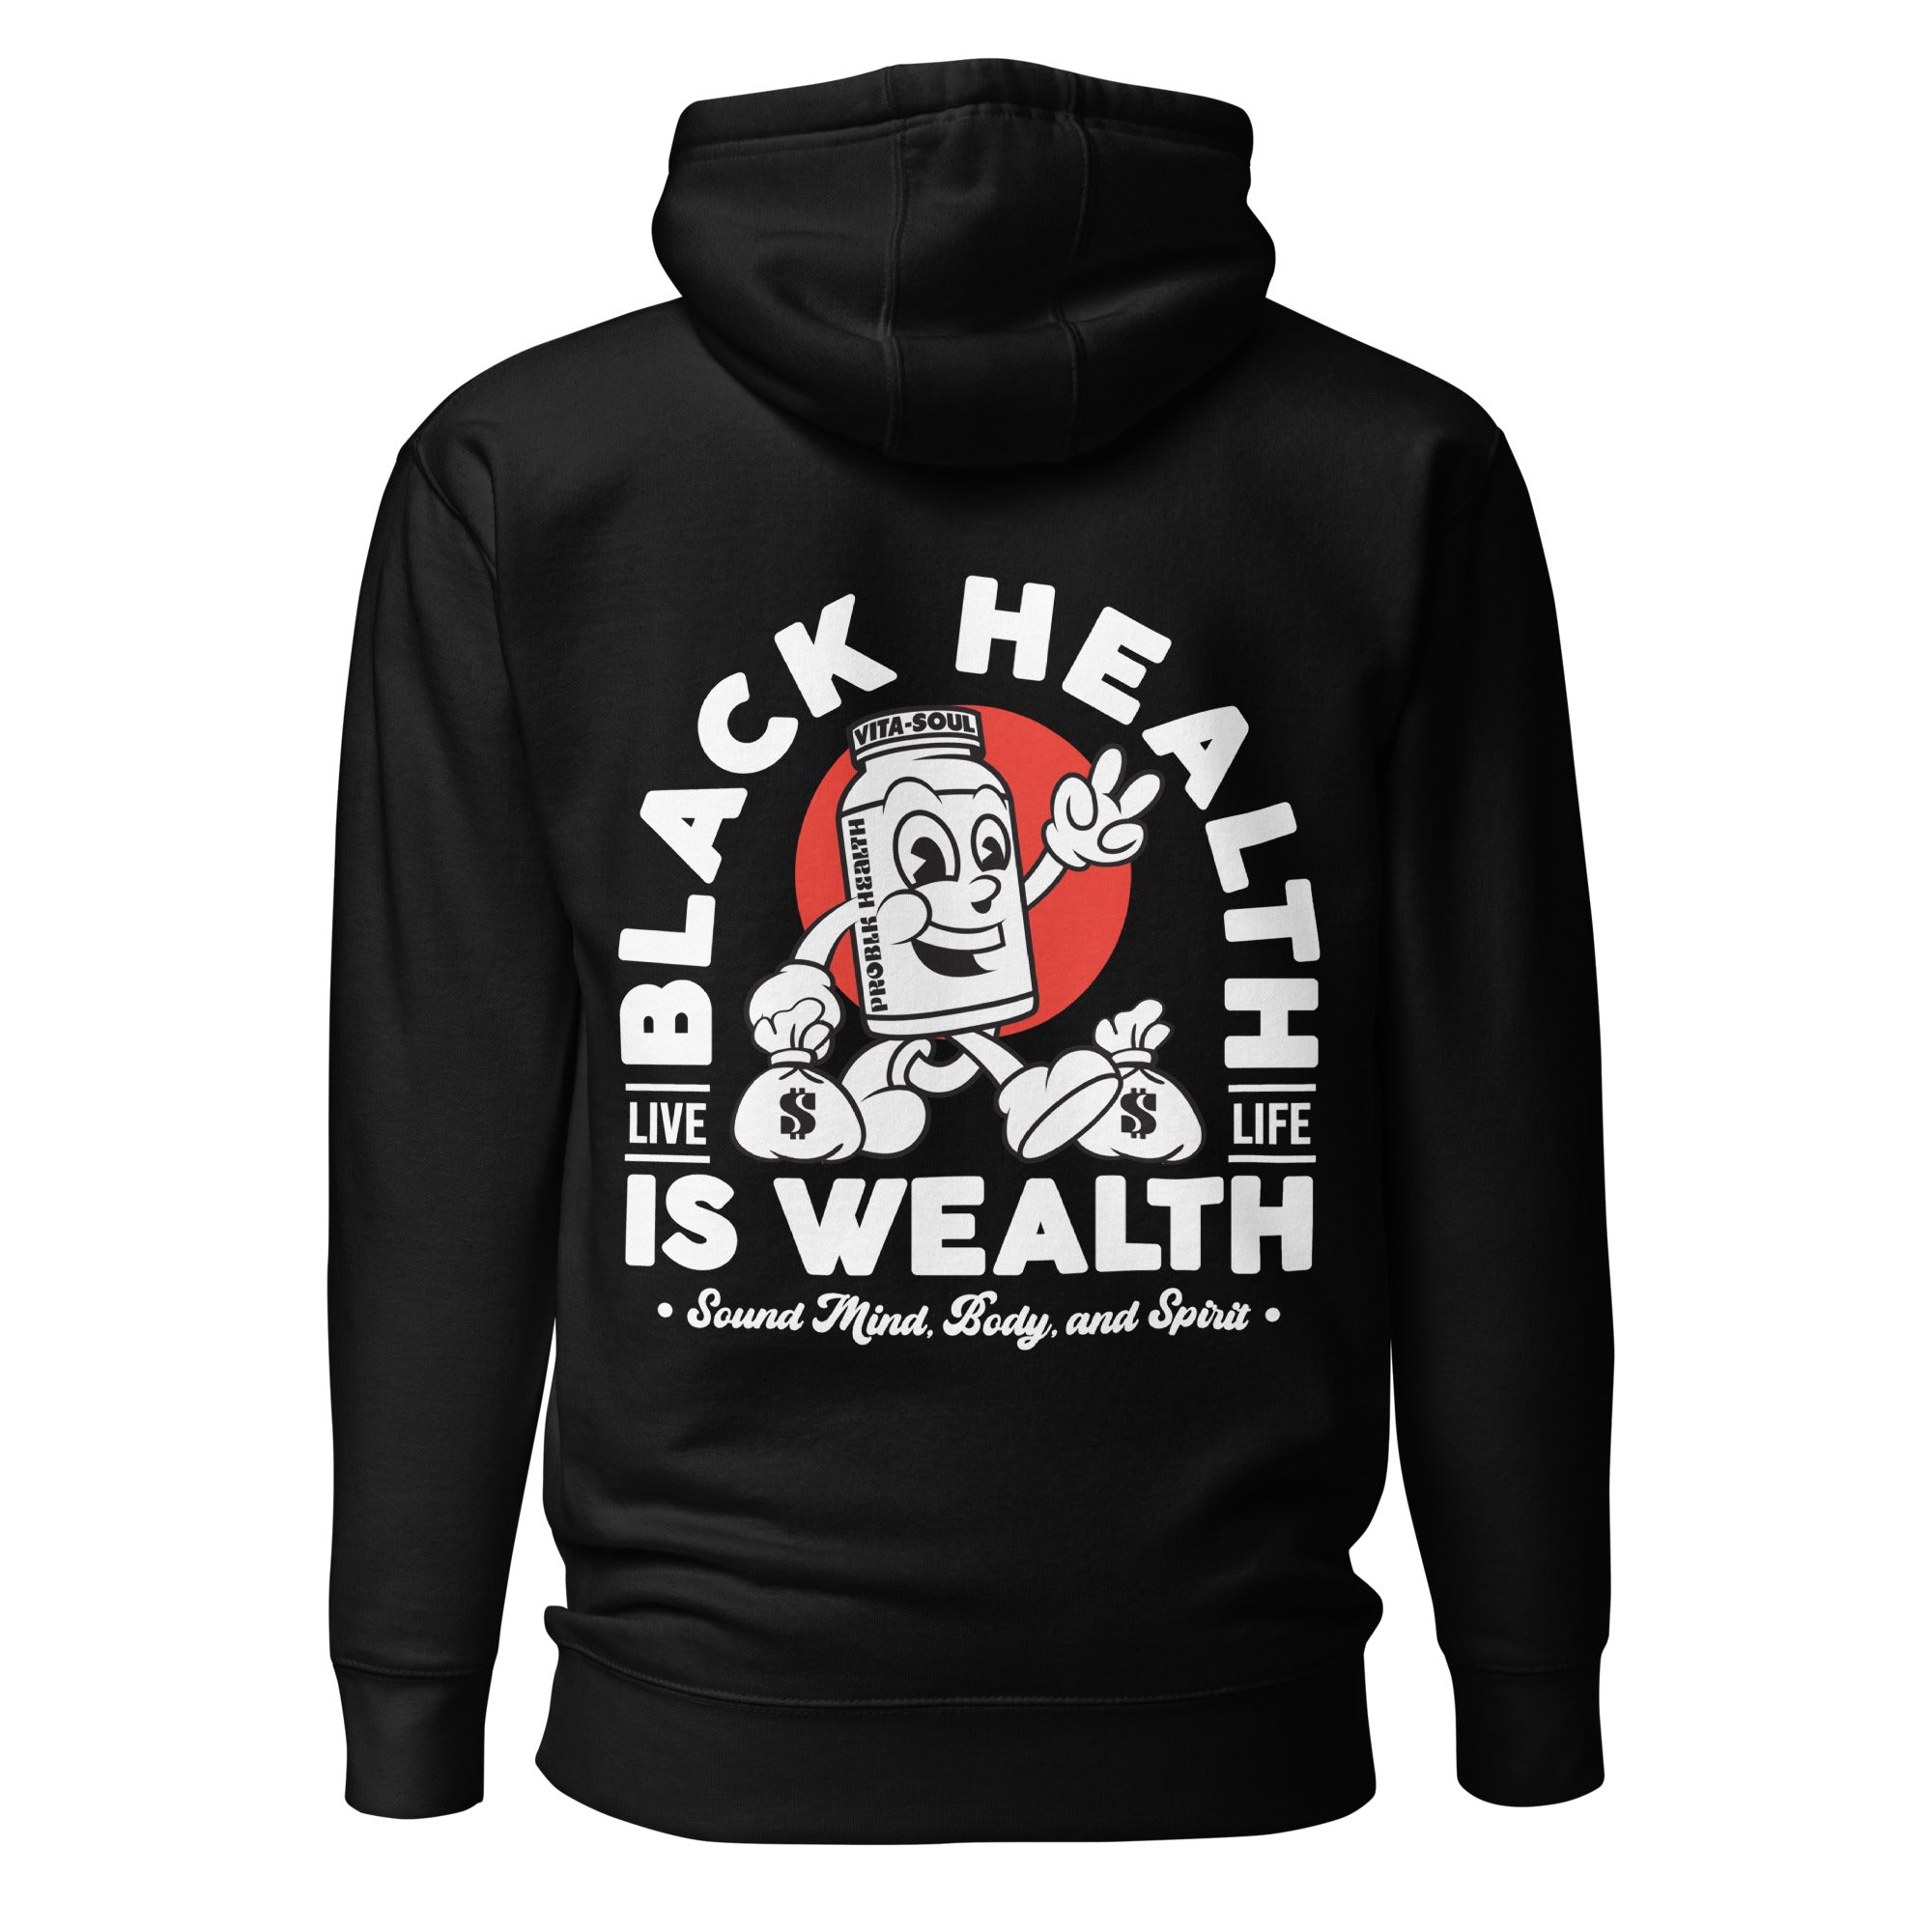 "BLACK HEALTH IS WEALTH" Unisex Premium Hoodie (front&back design)